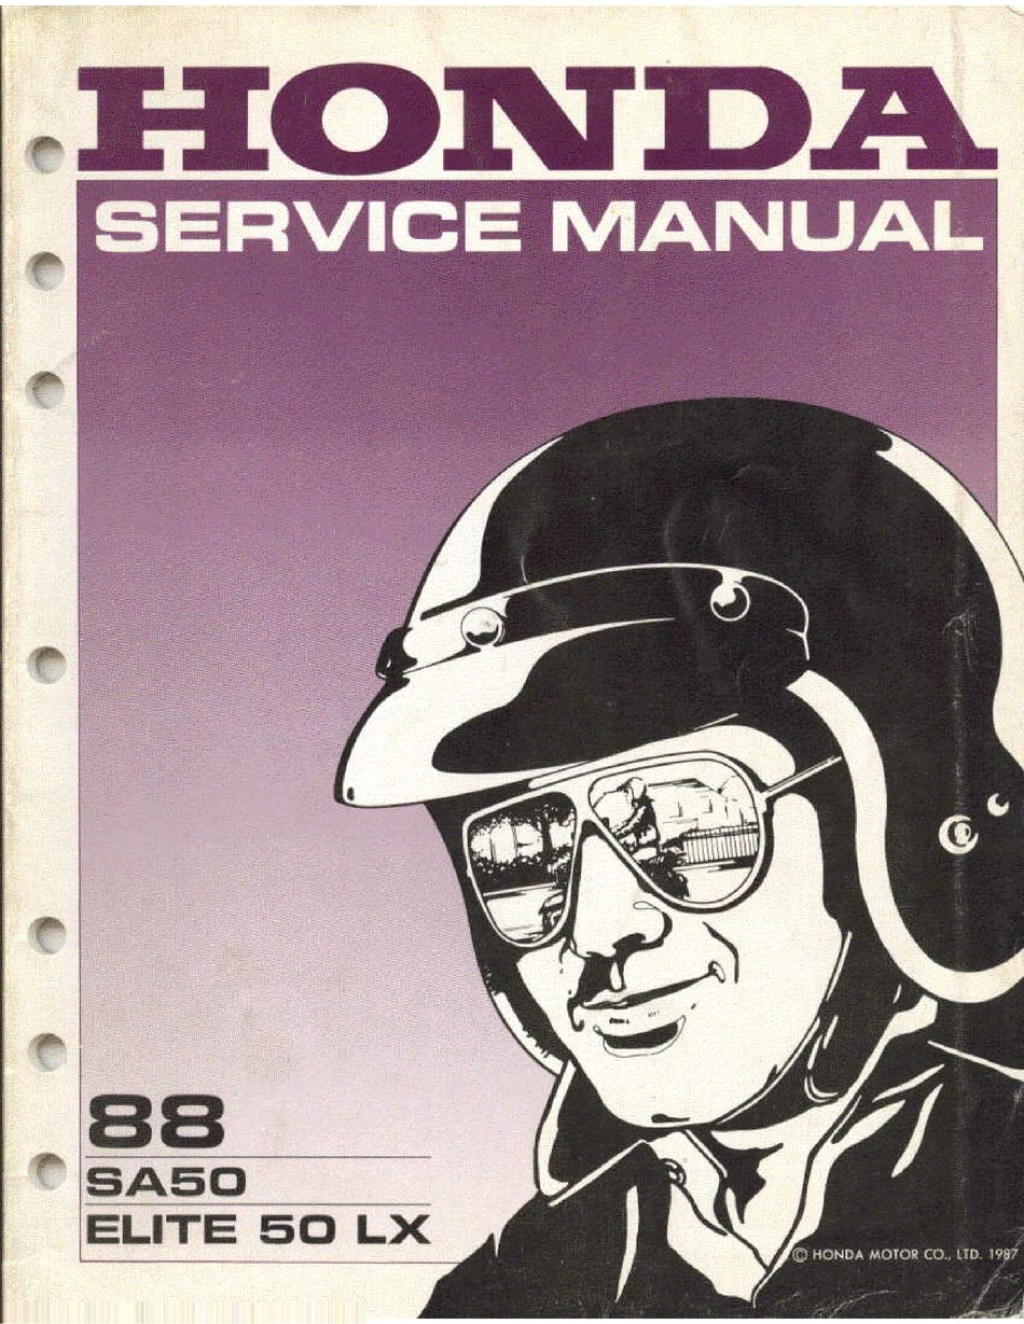 Picture of: HONDA ELITE  LX SERVICE MANUAL Pdf Download  ManualsLib